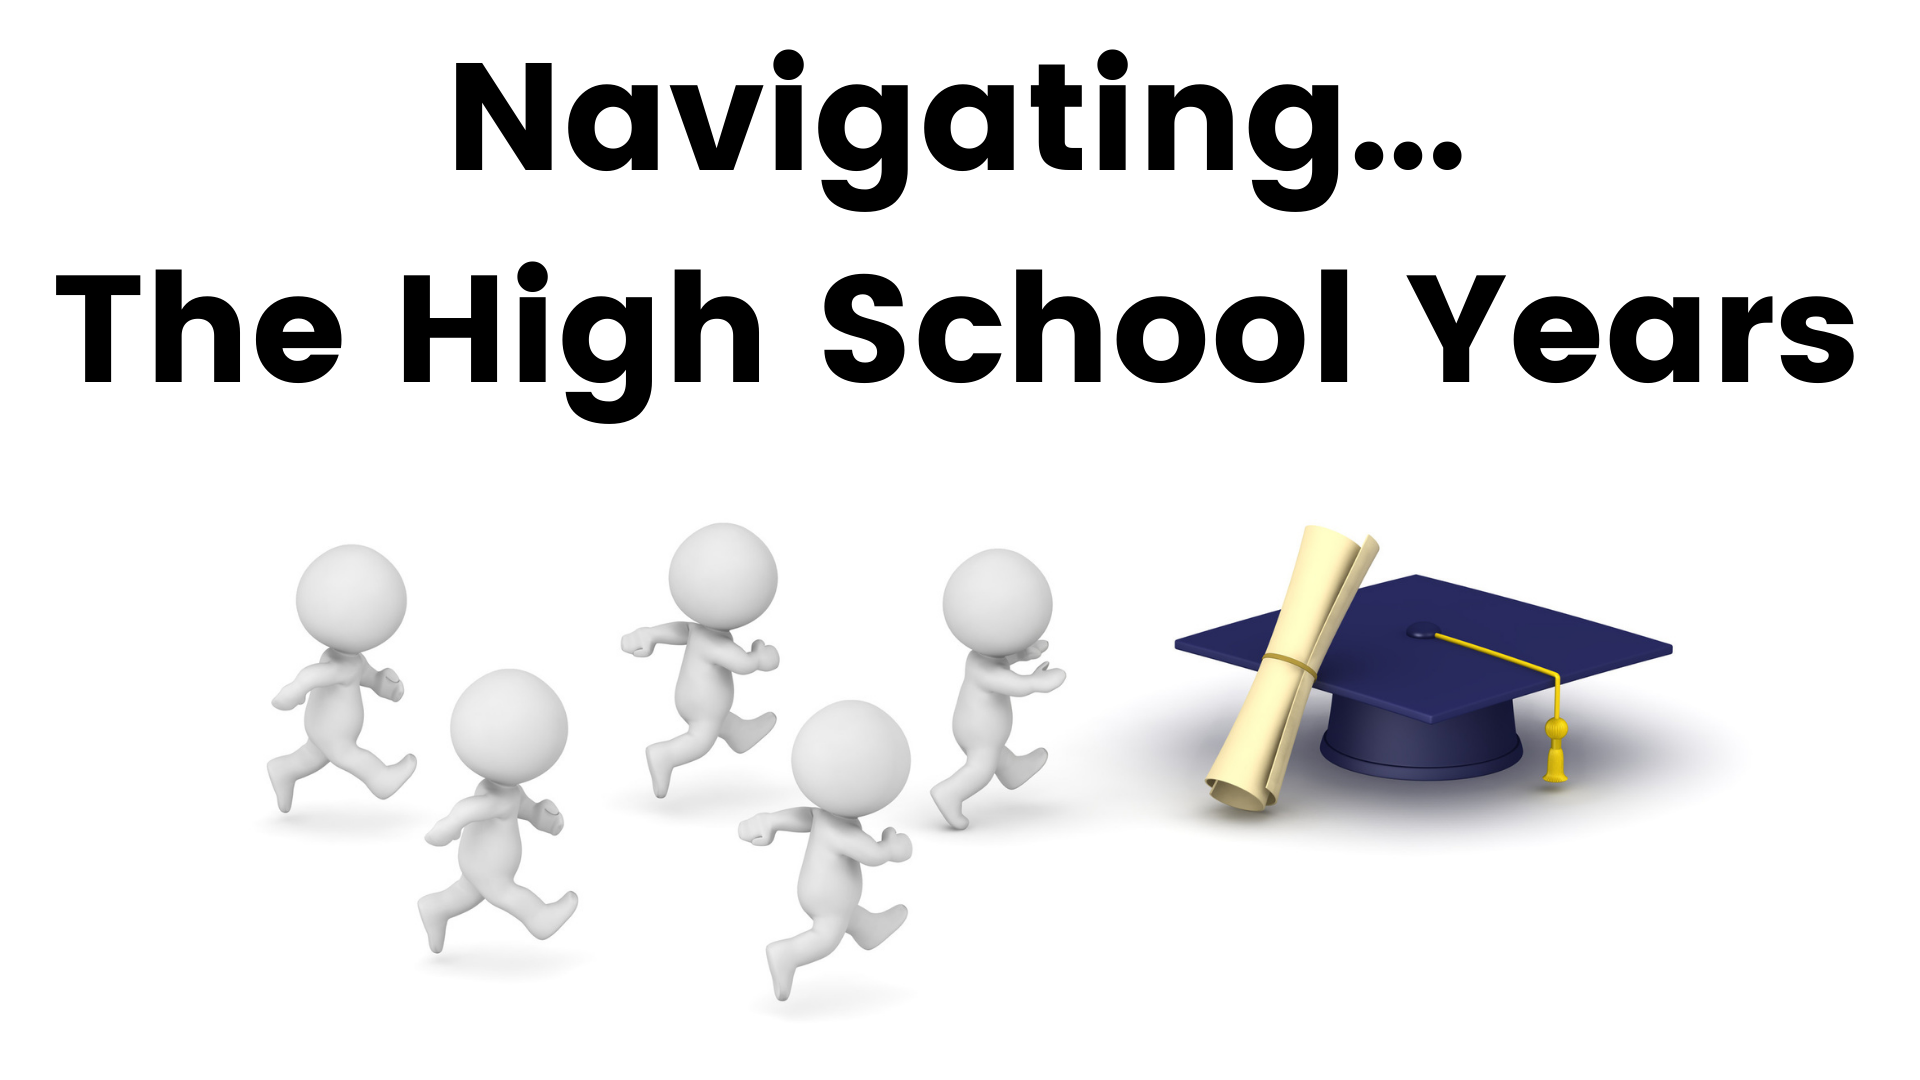 Navigating the High School Years